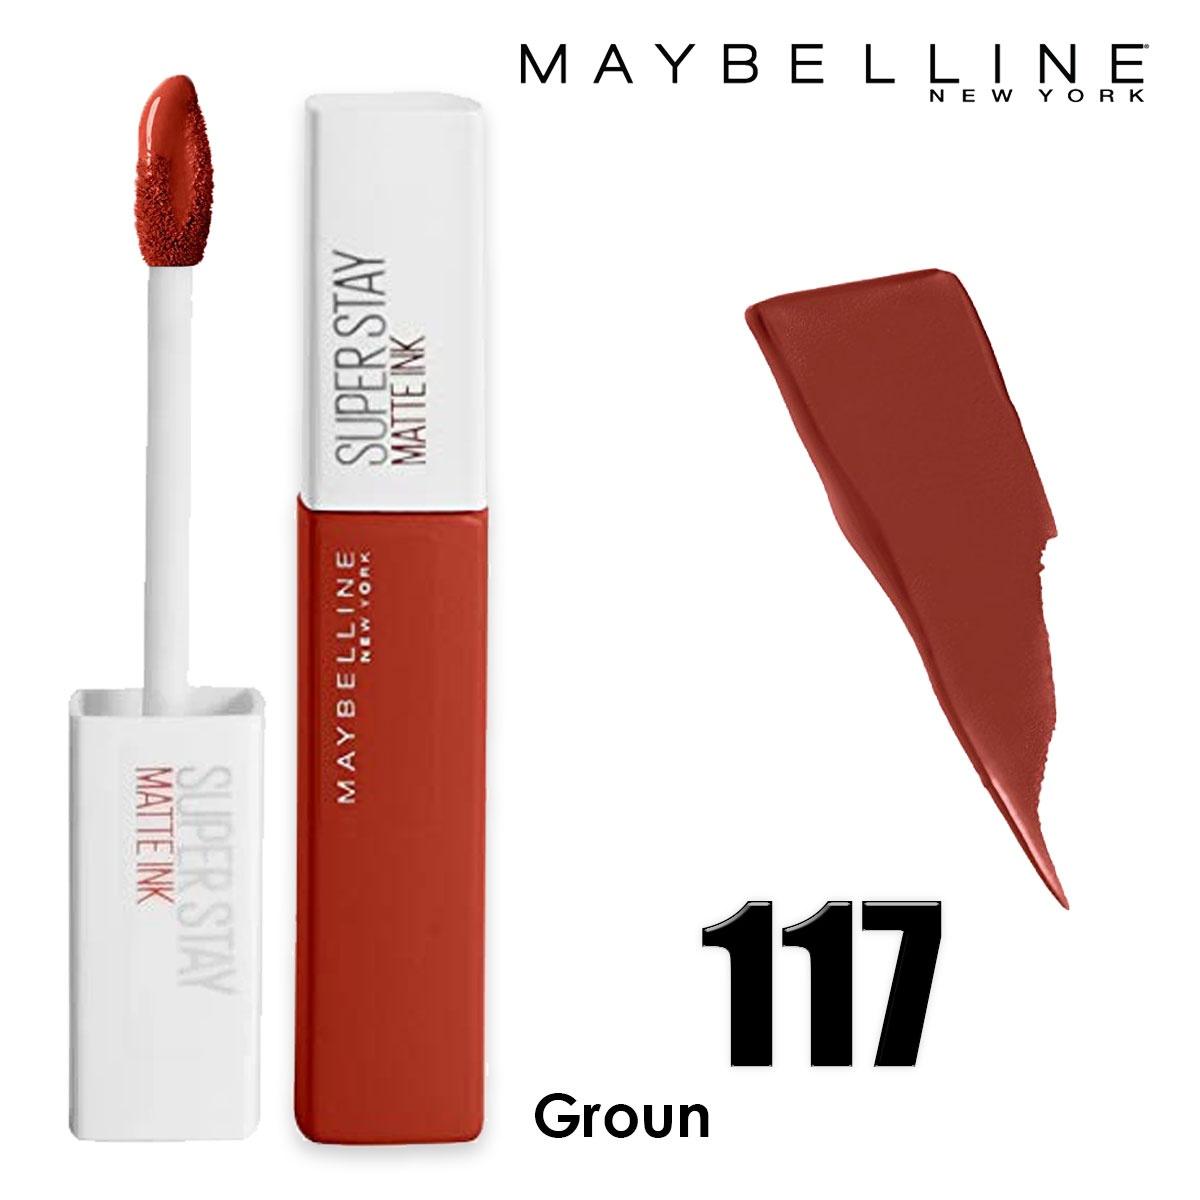 Maybelline stay matte ink 117 groun